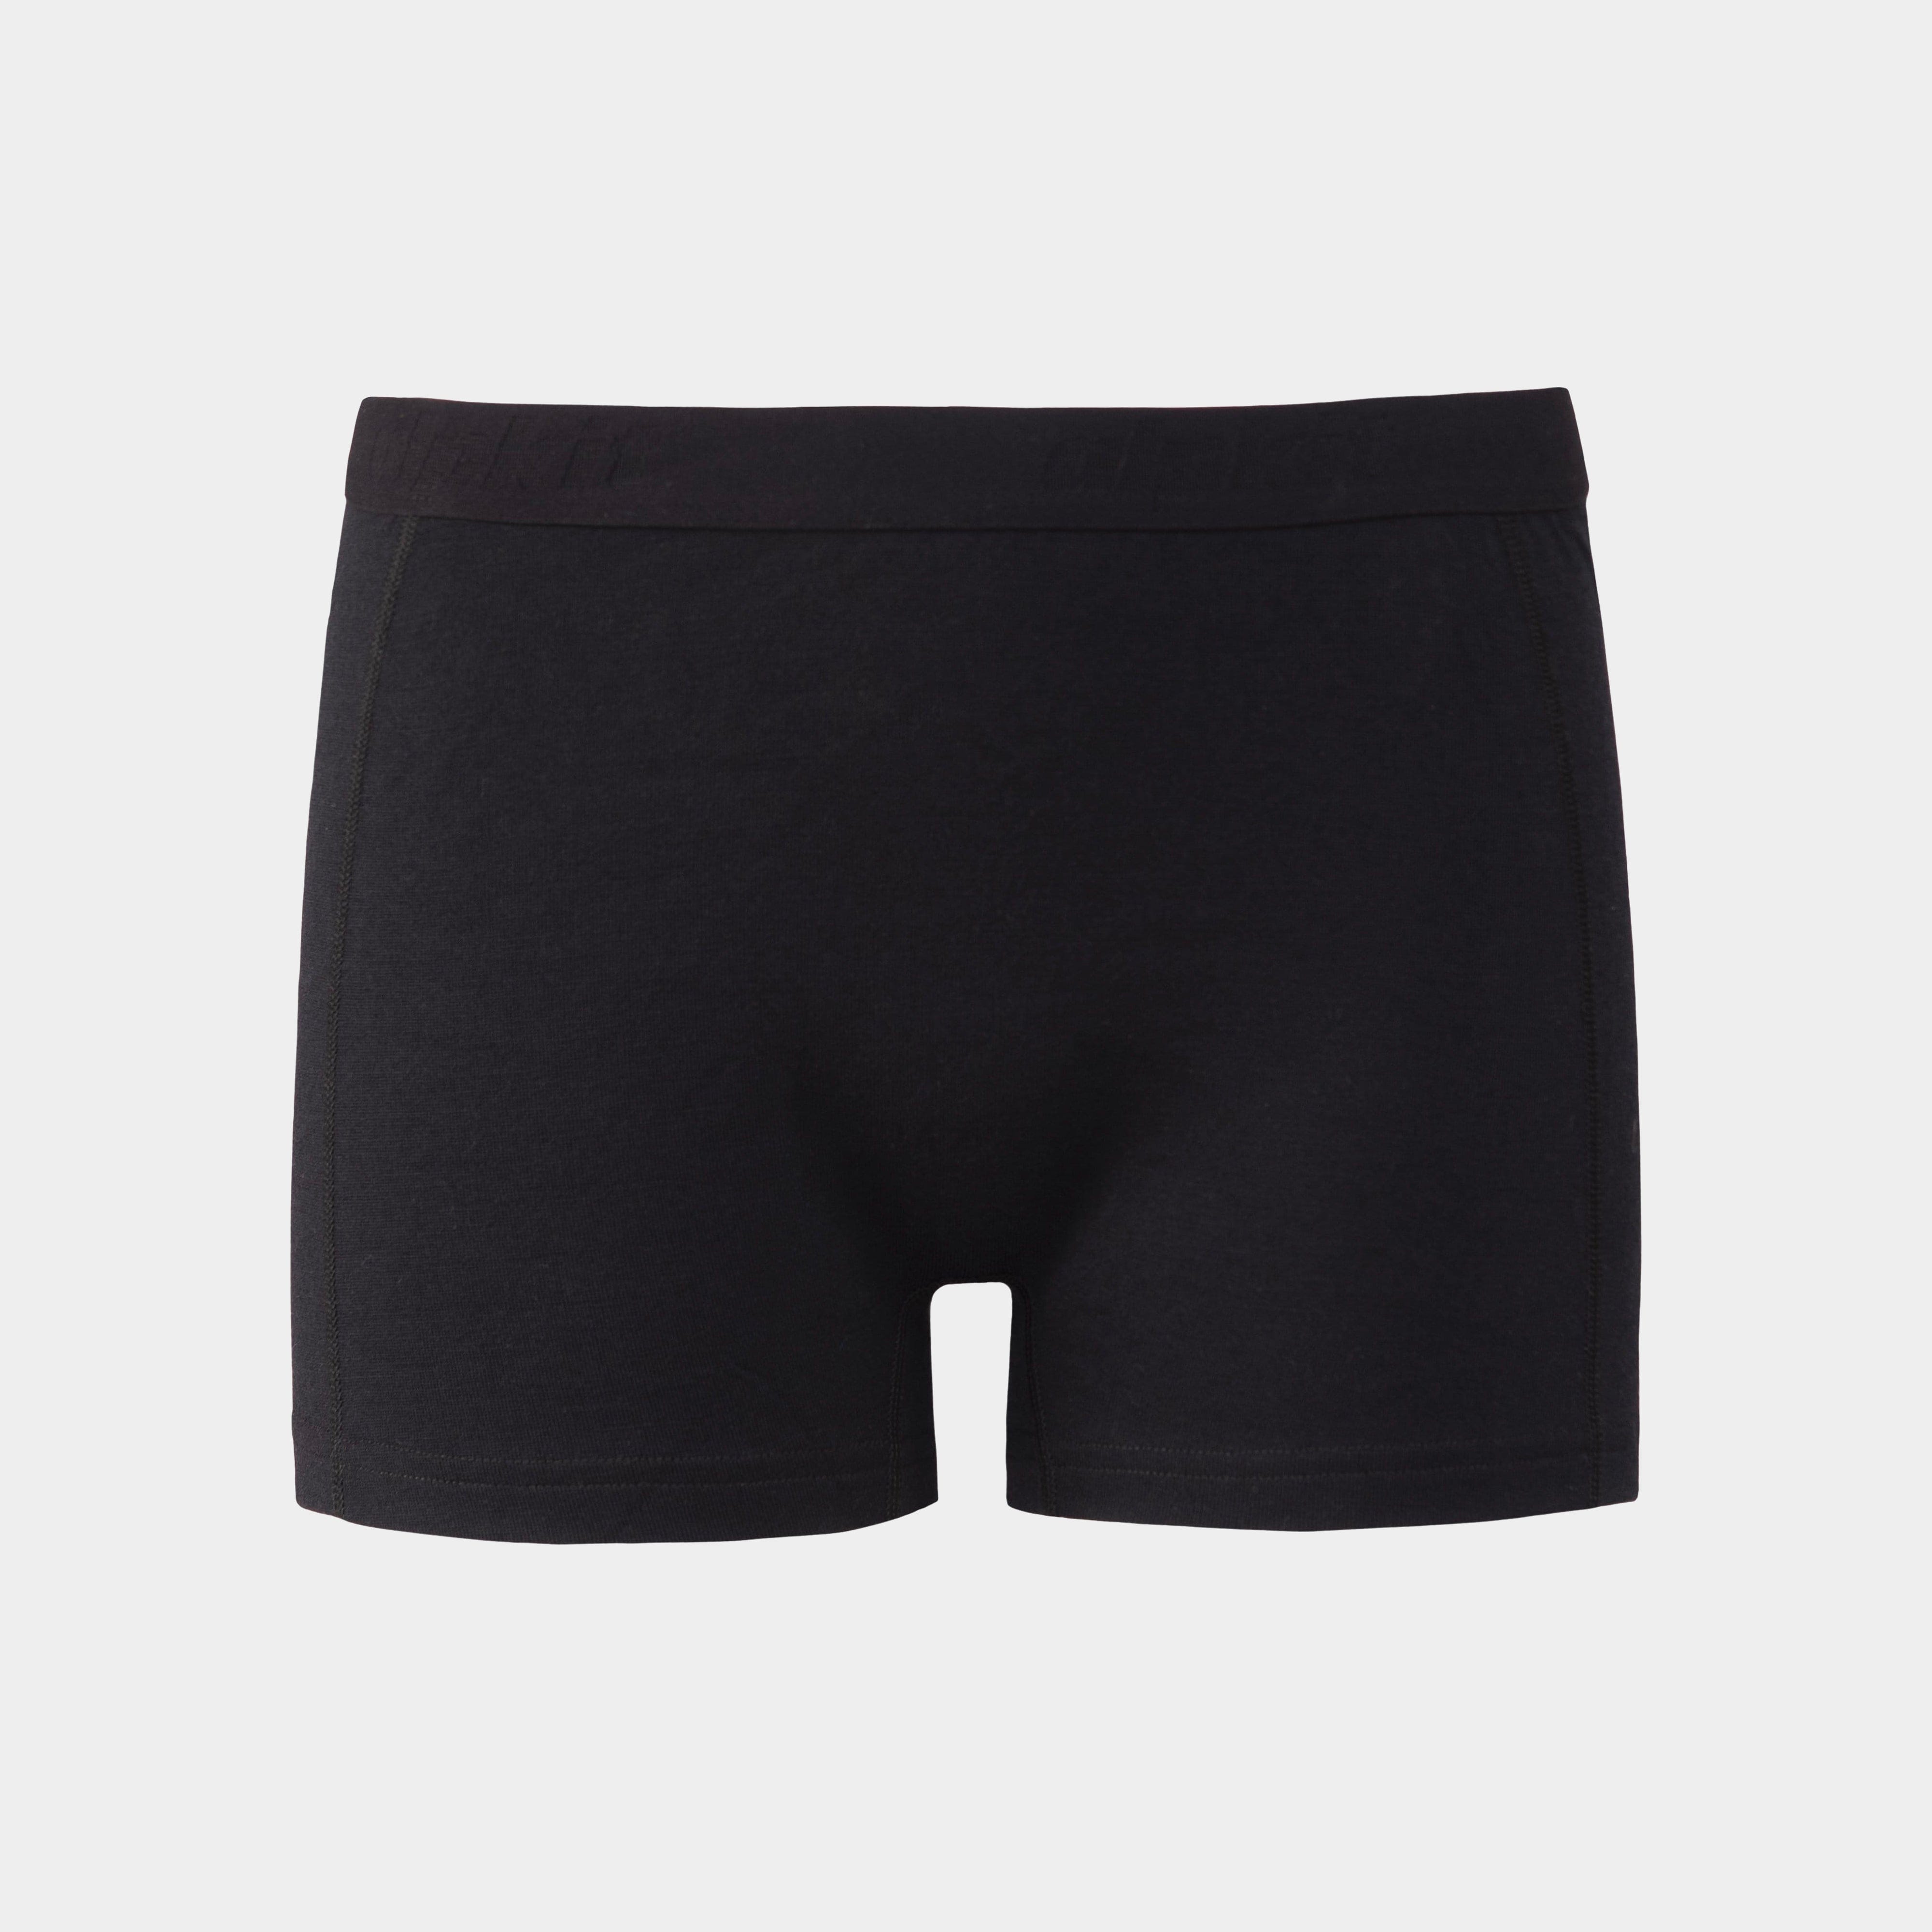 Buy METARINO 2 Pack Women's Athletic Underwear Panties Soft Merino Wool  Sports Active Briefs,Black Light Grey,Medium at